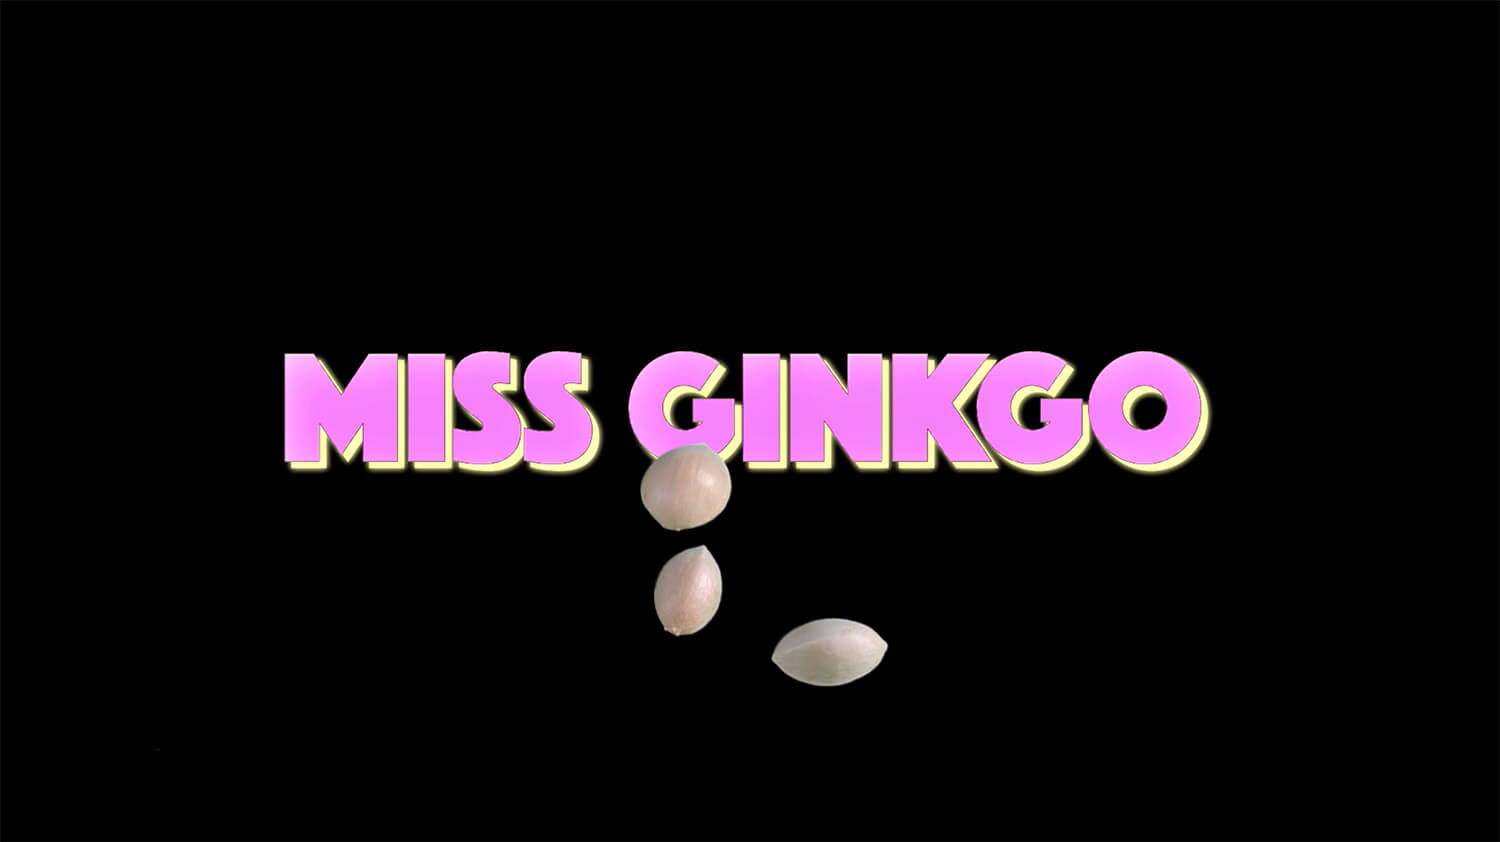 Tang Han Miss Ginkgo Chapter1 still3 -